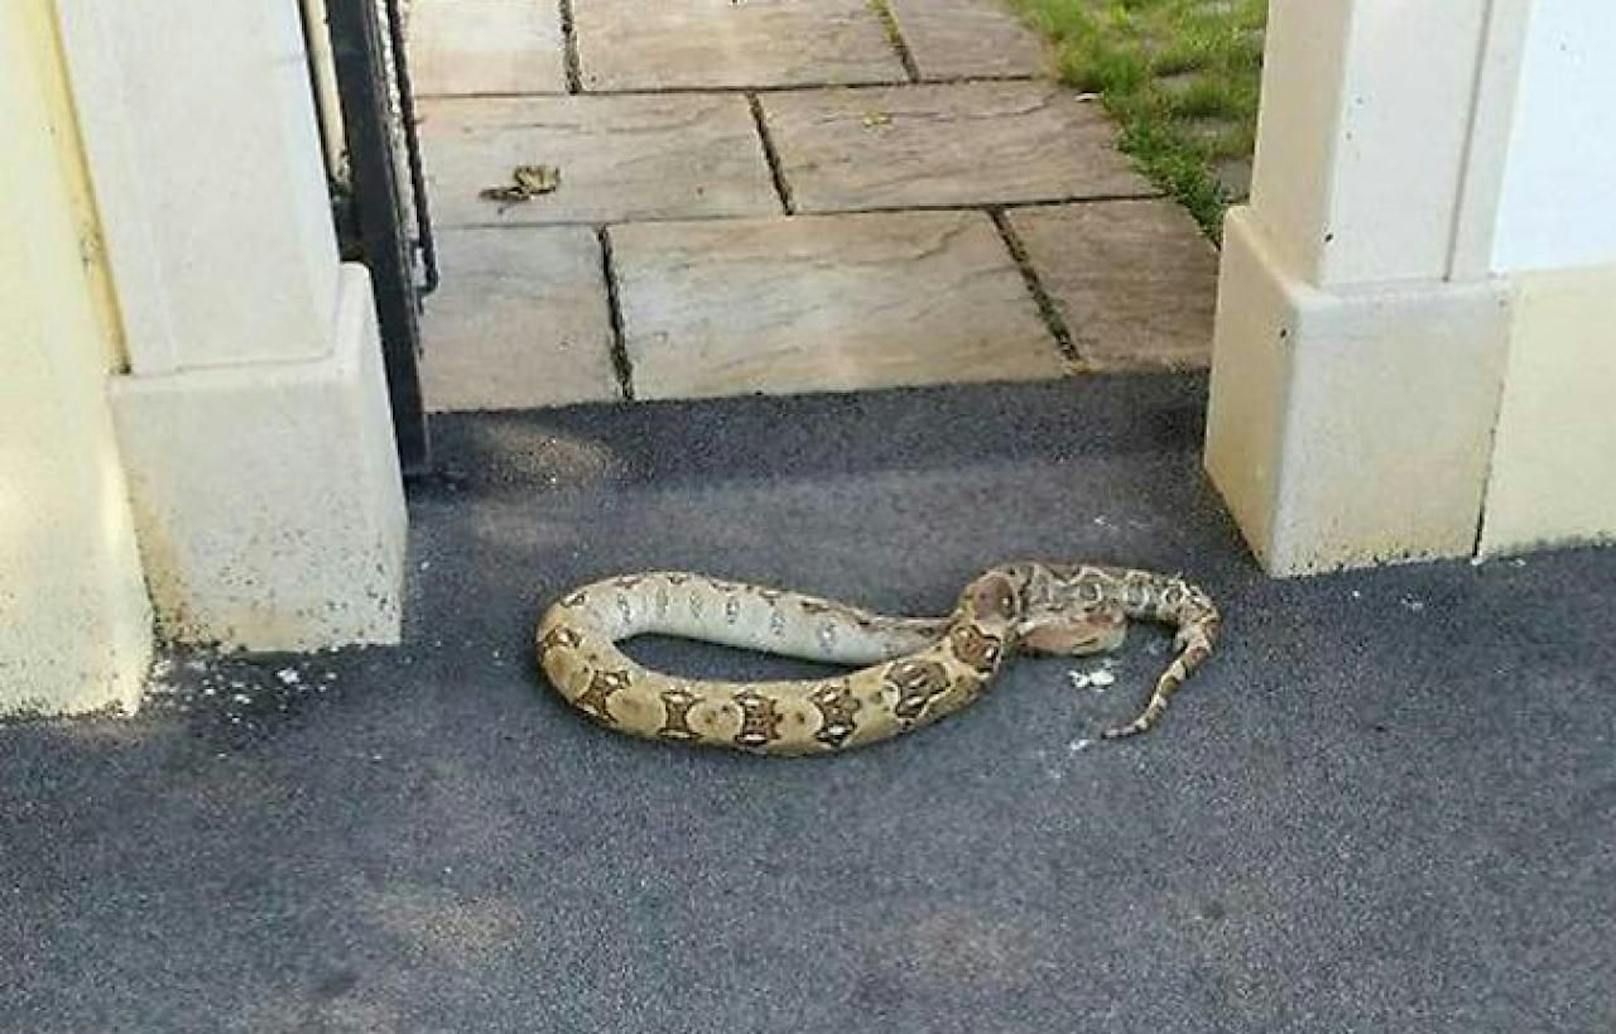 Die Schlange war bereits tot.